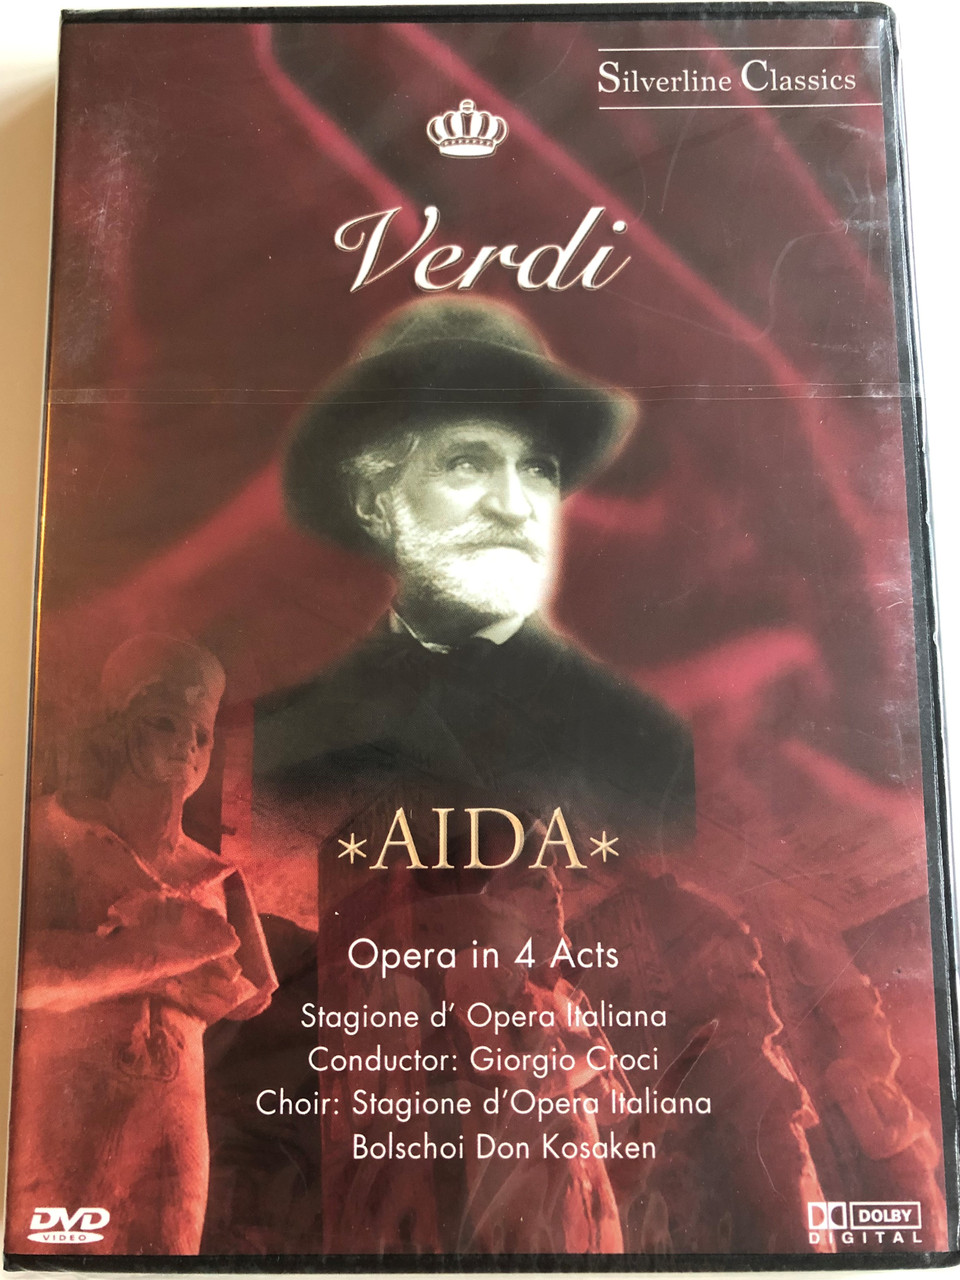 Verdi – Aida / Opera in 4 Acts / Stagione D'Opera Italiana, Giorgio Croci  ‎/ Silverline Classics / Cascade Medien ‎DVD 2003 / 80016 -  bibleinmylanguage